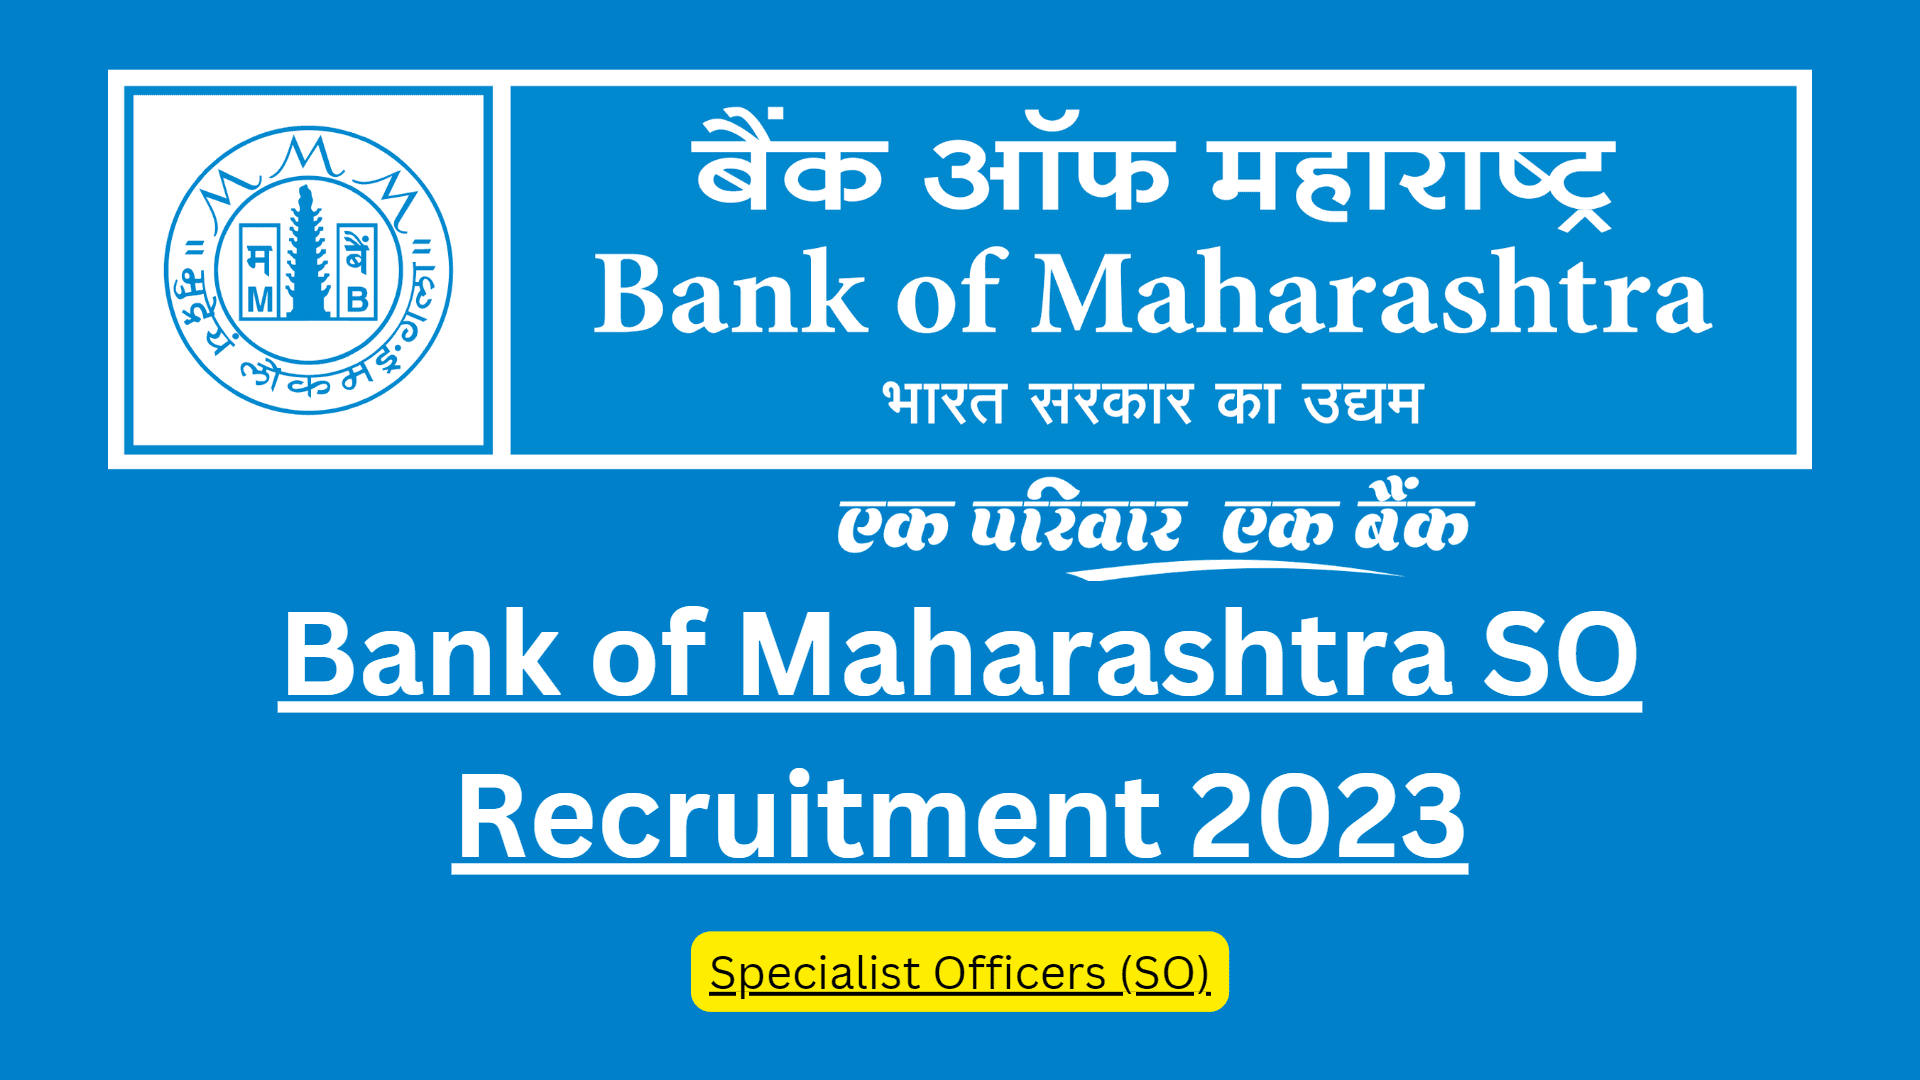 Bank of Maharashtra Branches in Amravati, Bank of Maharashtra